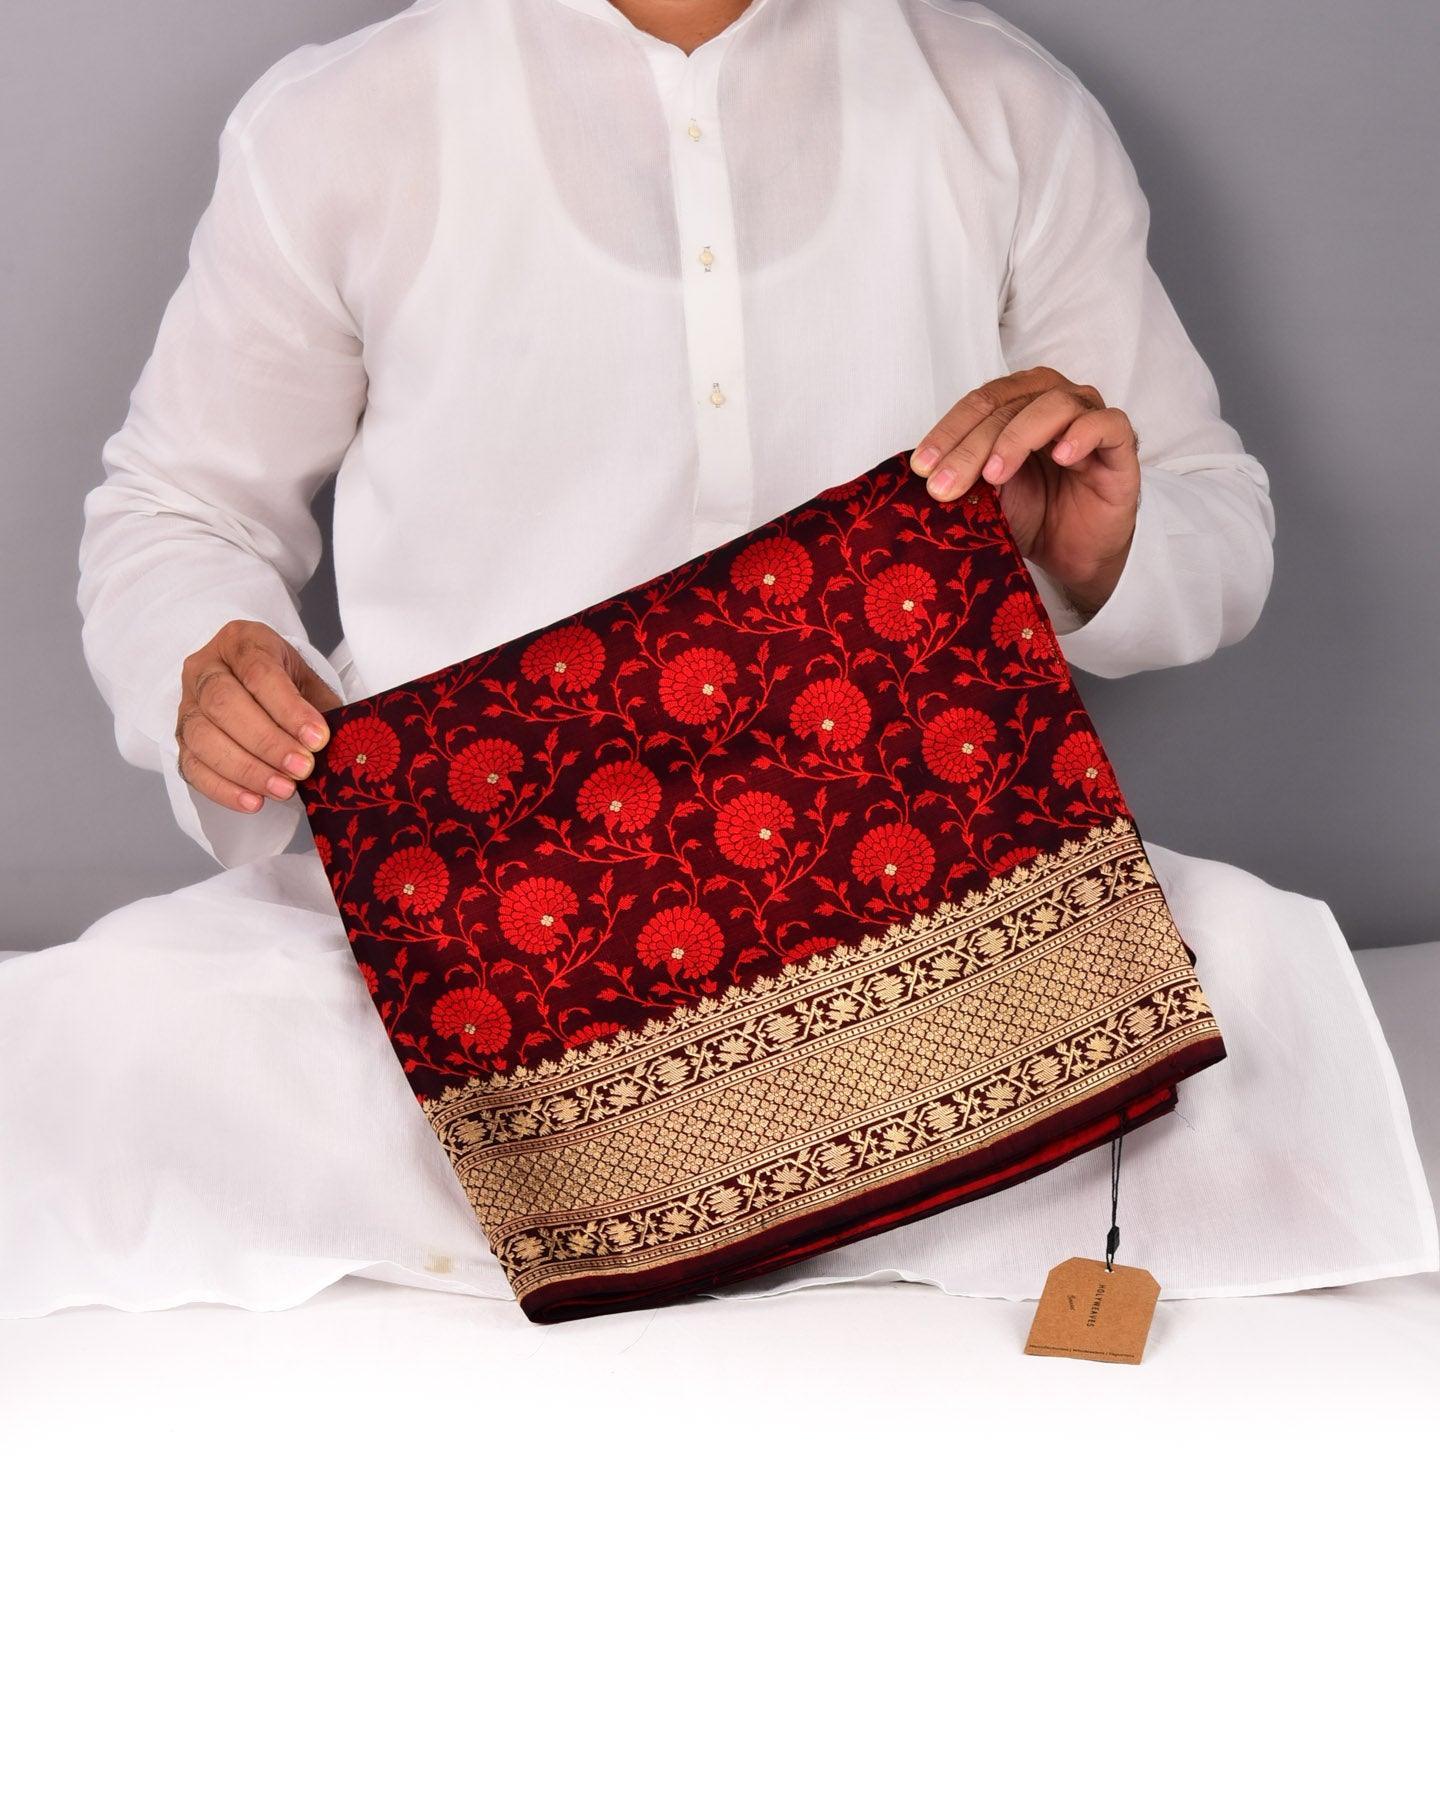 Red on Maroon Banarasi Zari Buti Tanchoi Brocade Handwoven Katan Silk Saree - By HolyWeaves, Benares